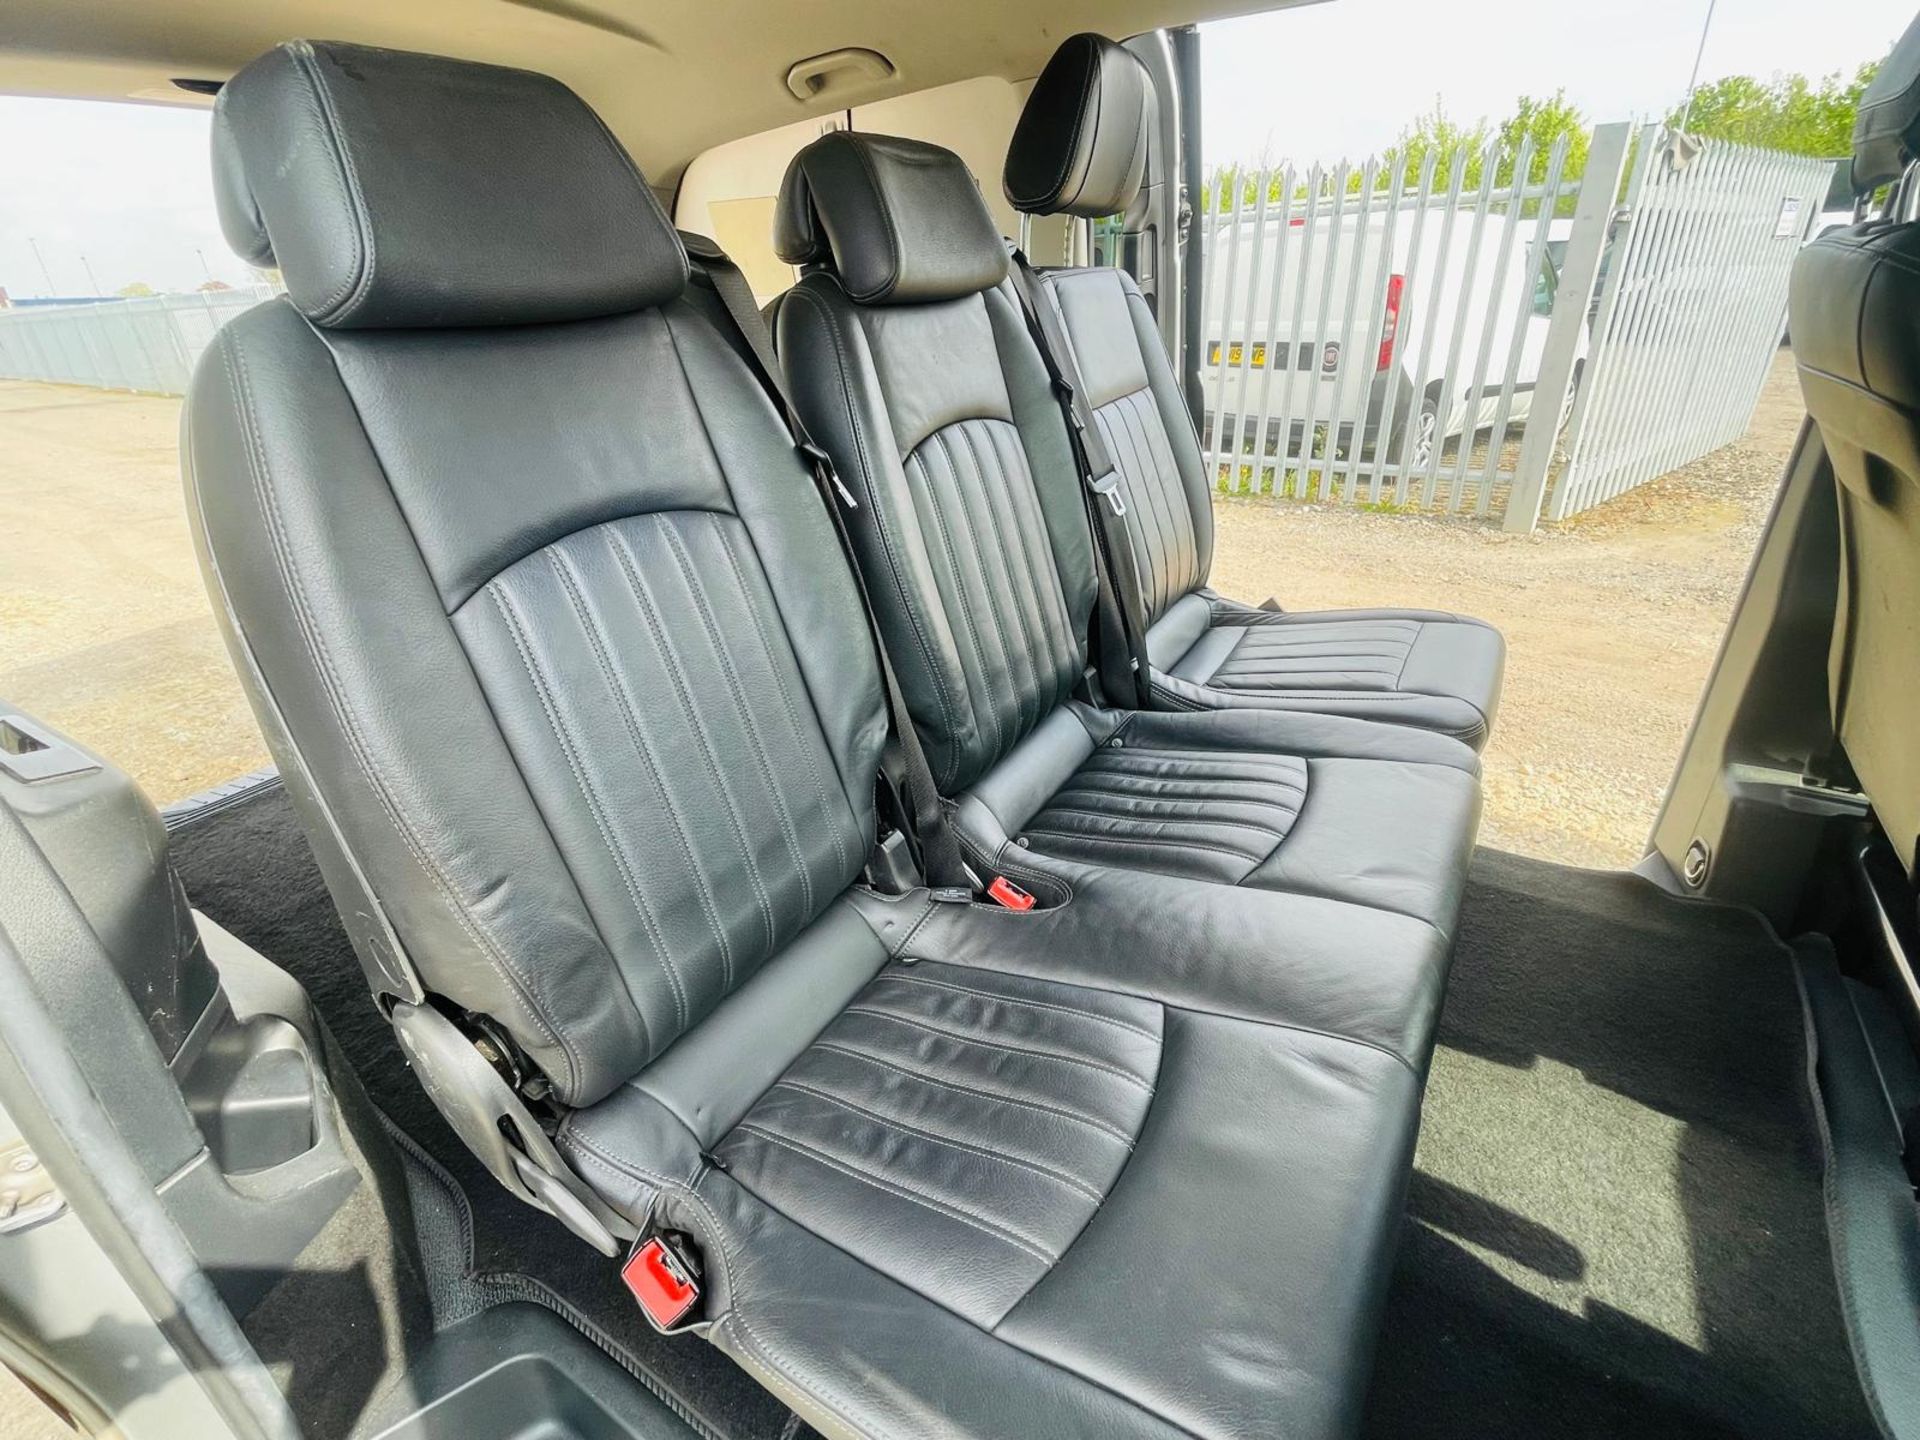 Mercedes-Benz Vito Premium 2.1 119 CDI 7G Tronic Crew Cab LWB Automatic 2019'19 Reg'- Alloy Wheels - Image 28 of 31